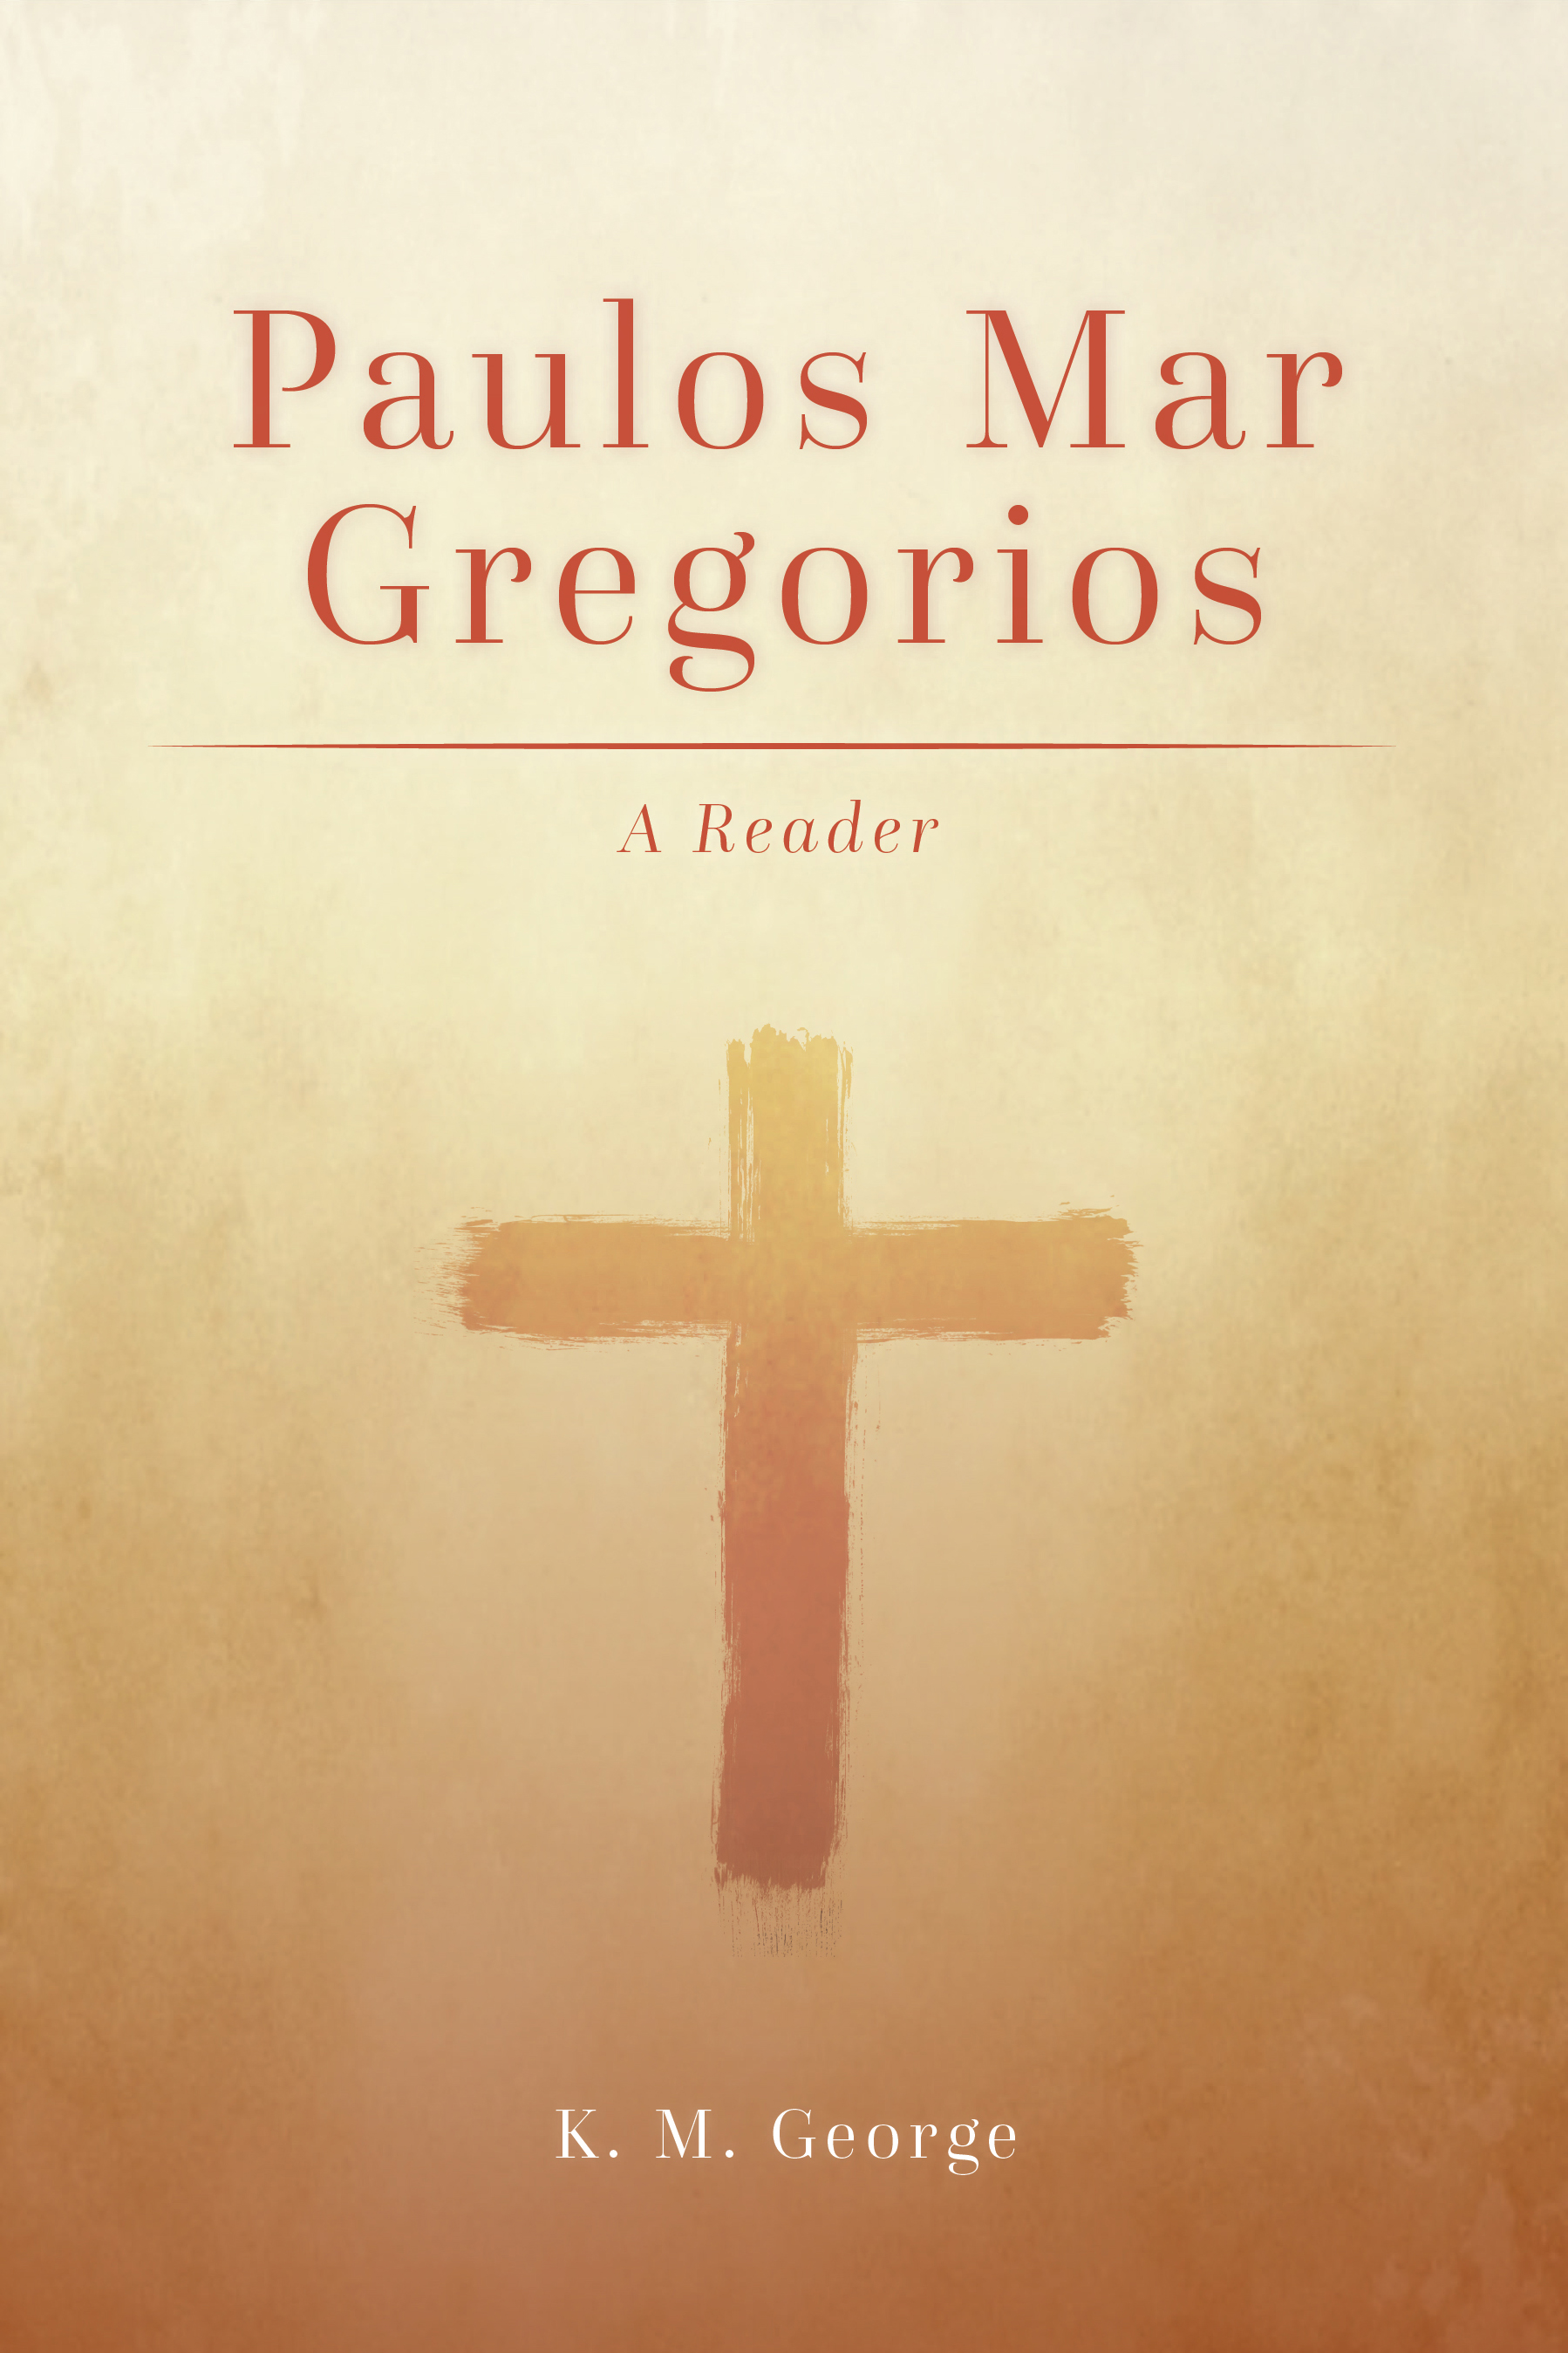 Paulos Mar Gregorios: A Reader by Fr. Dr. K. M. George